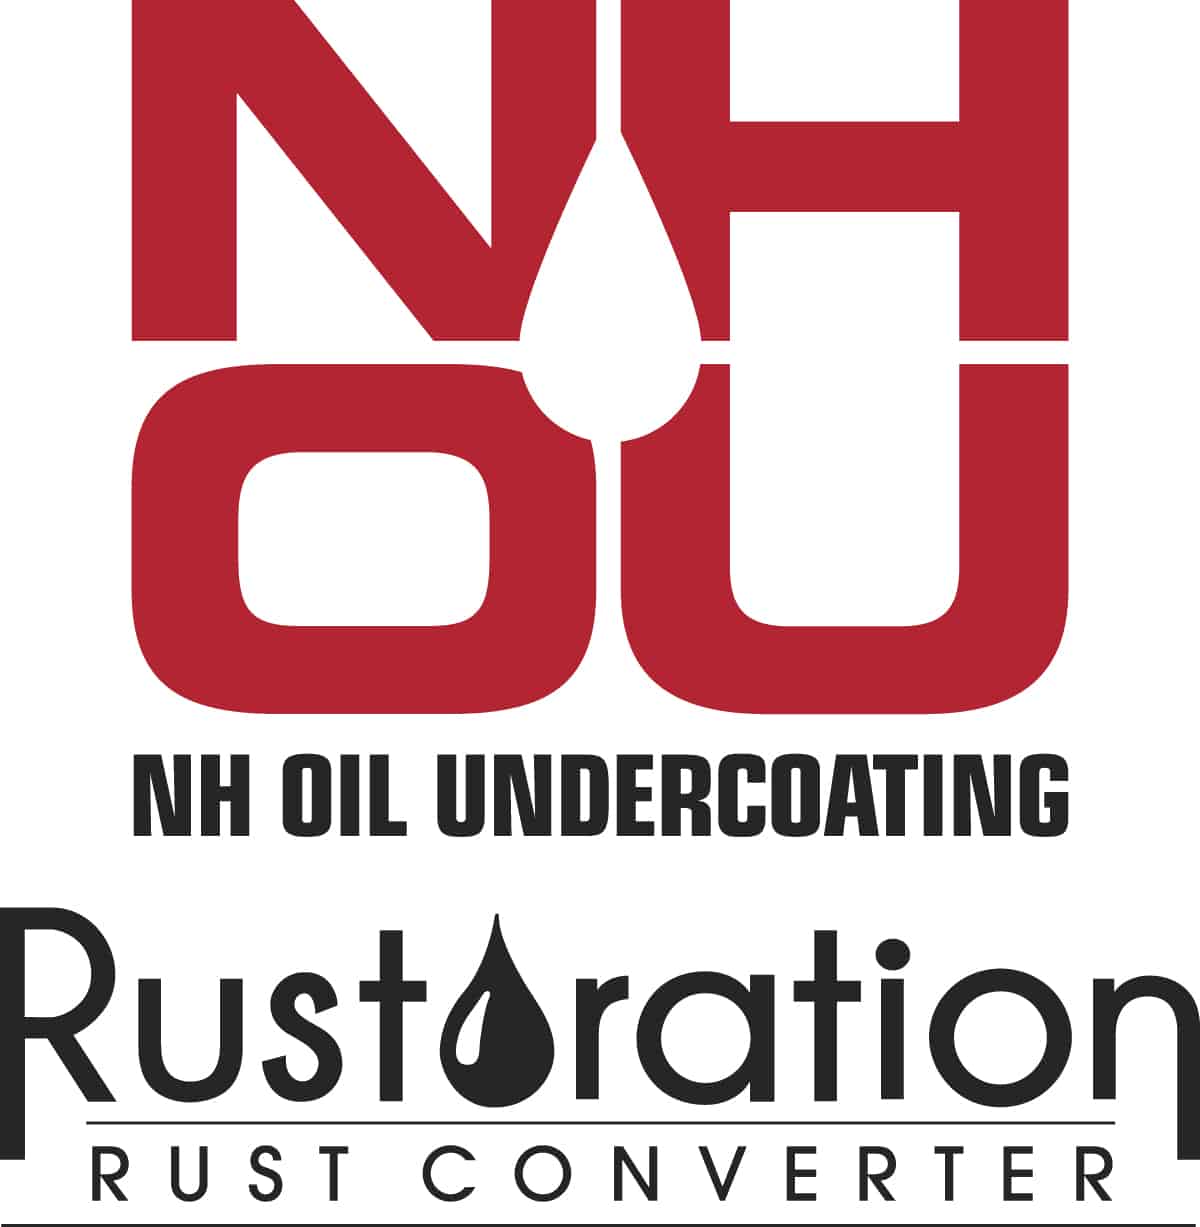 Rustoration rust converter